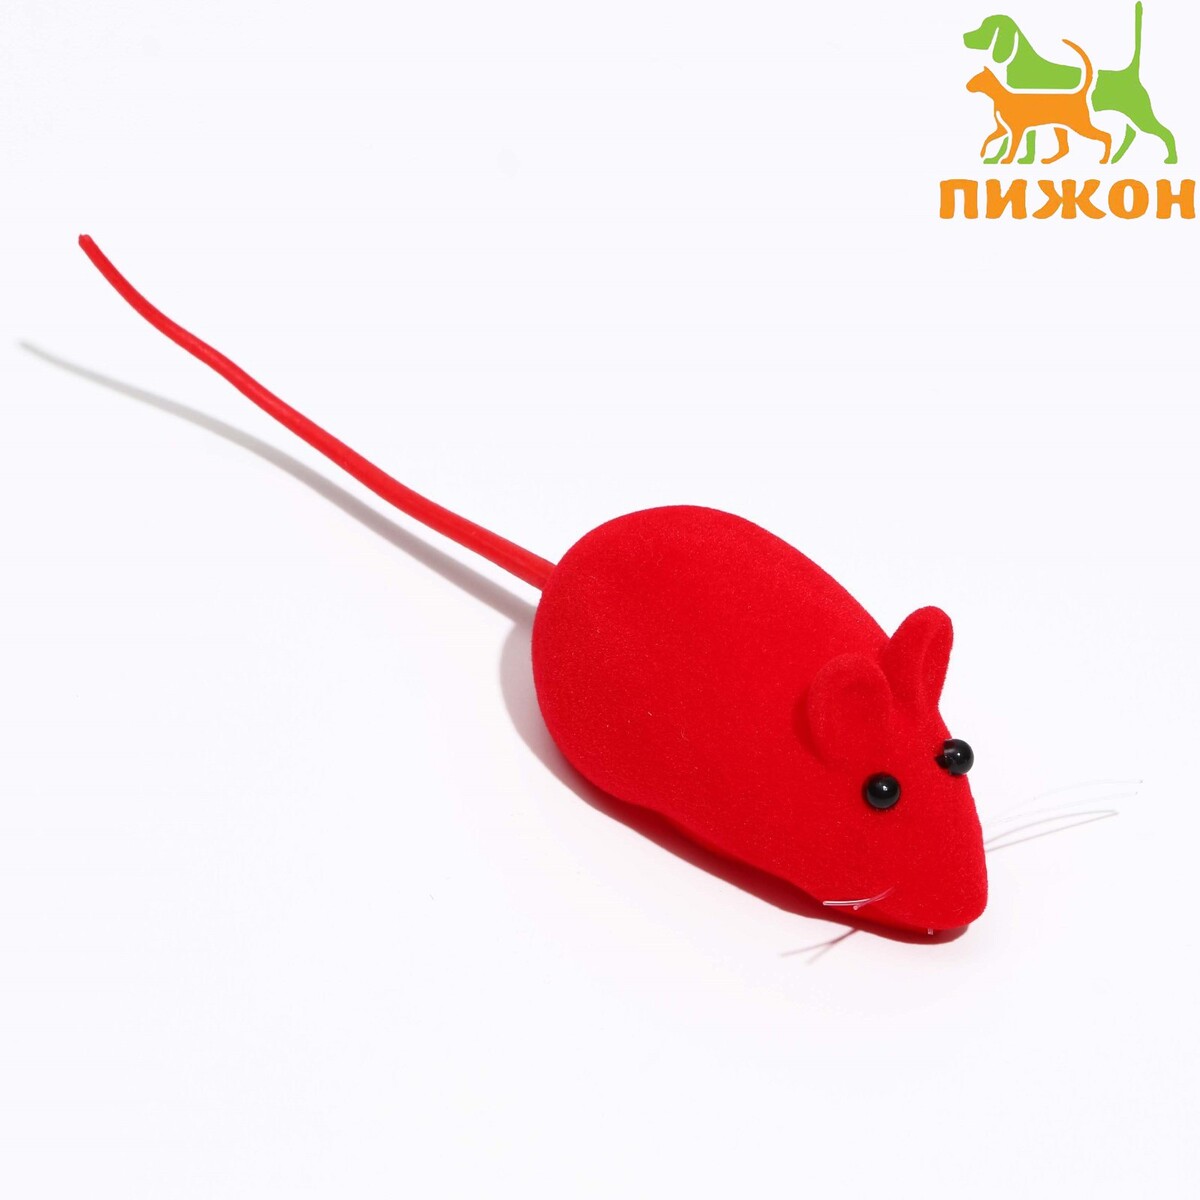 Мышь бархатная, 6 см, красная мышь genius nx 8006s красная 31030024401